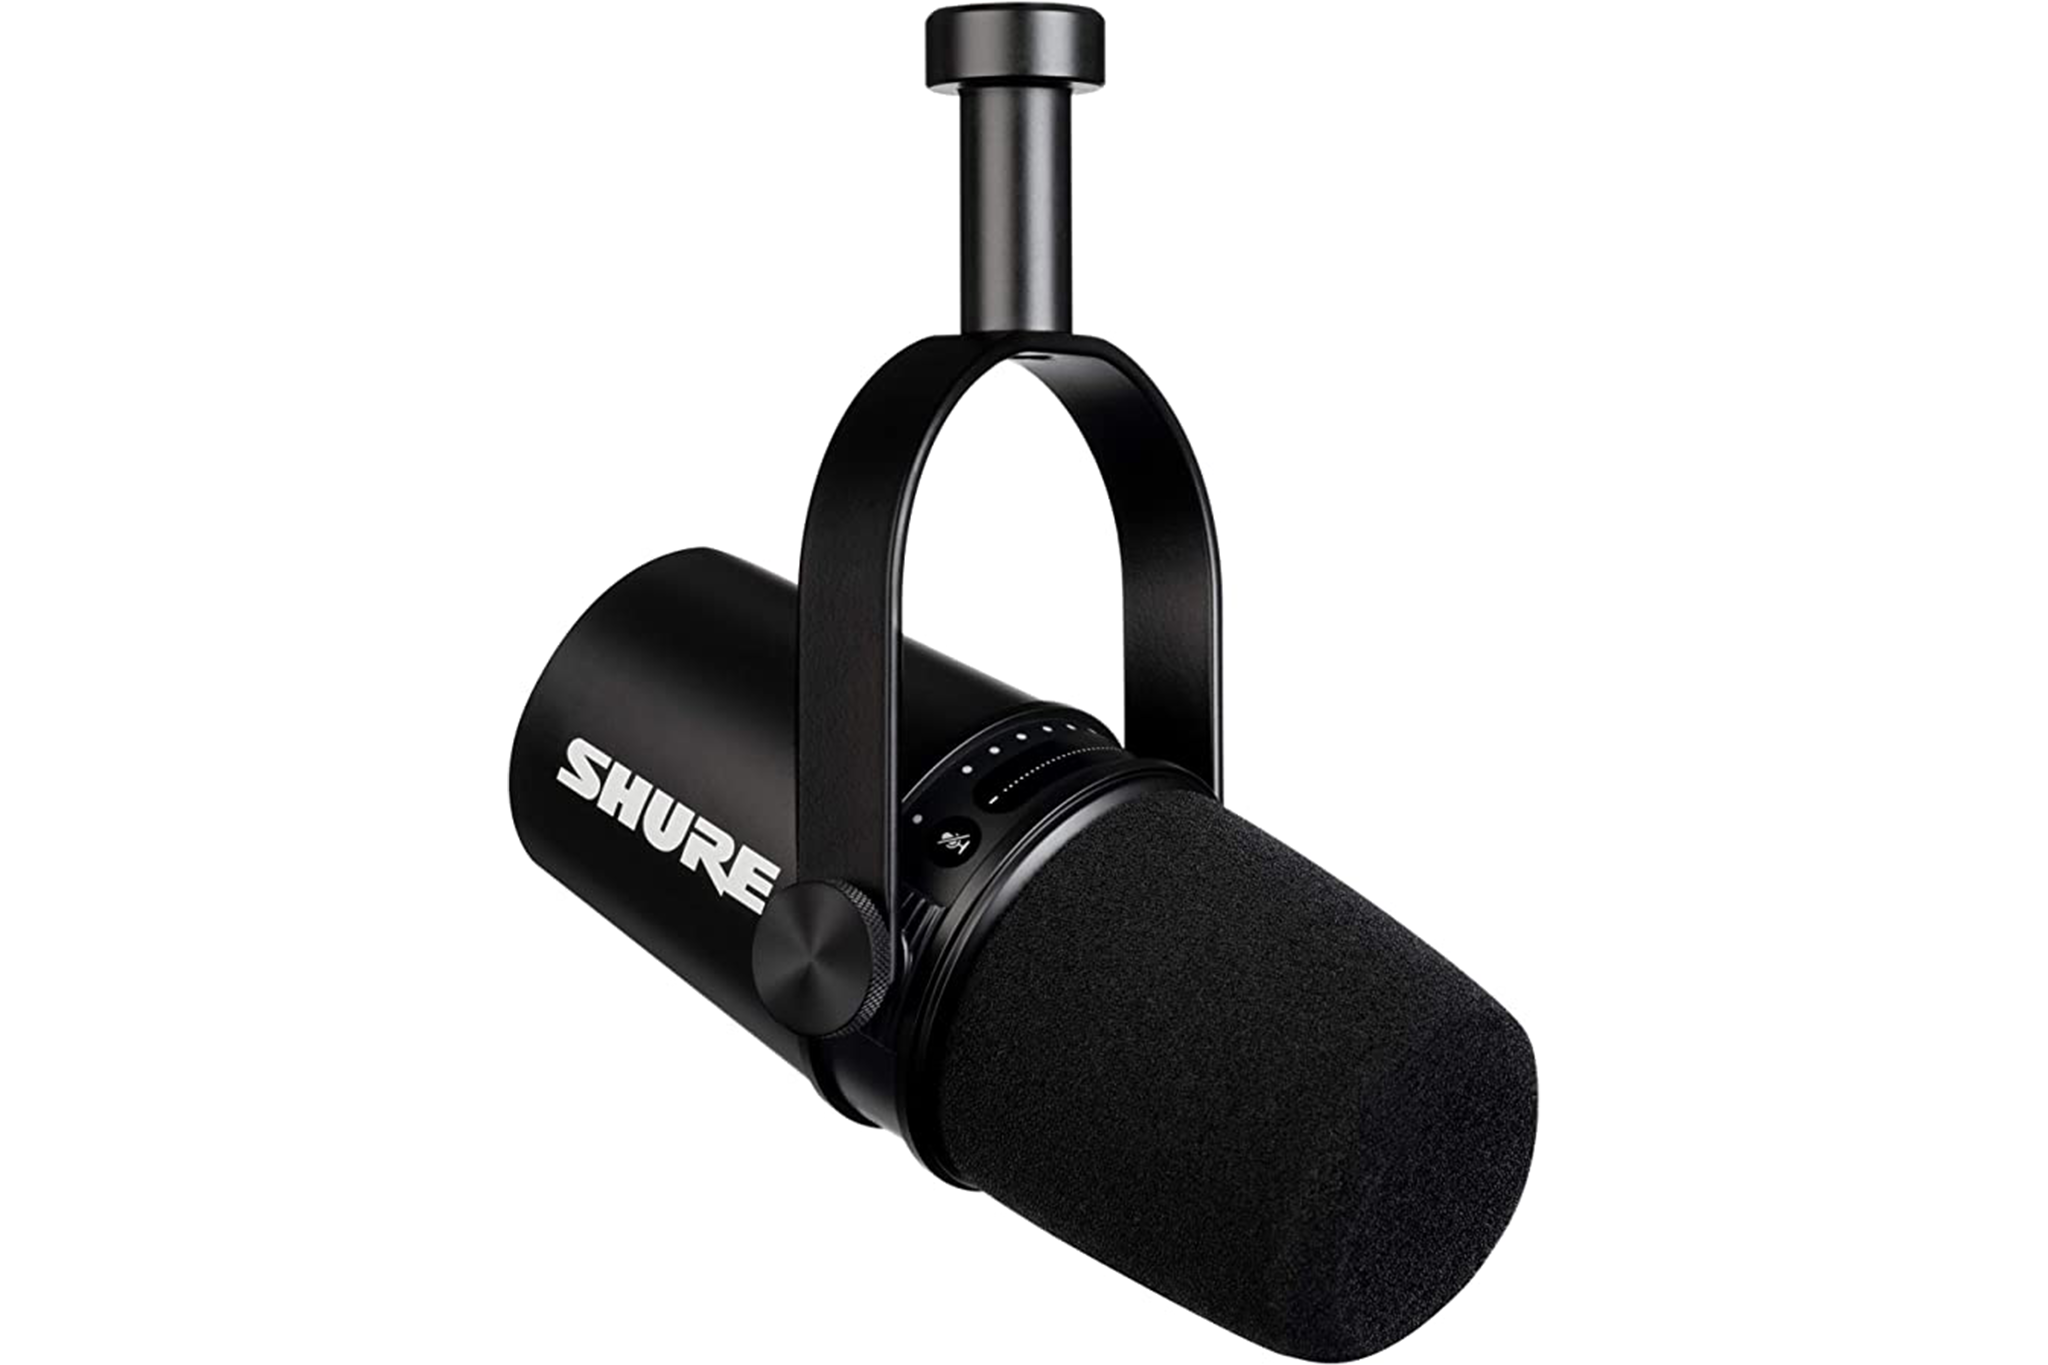 møl koncept Passiv Shure MV7 USB Podcast Microphone - Black - Terry Carter Music Store